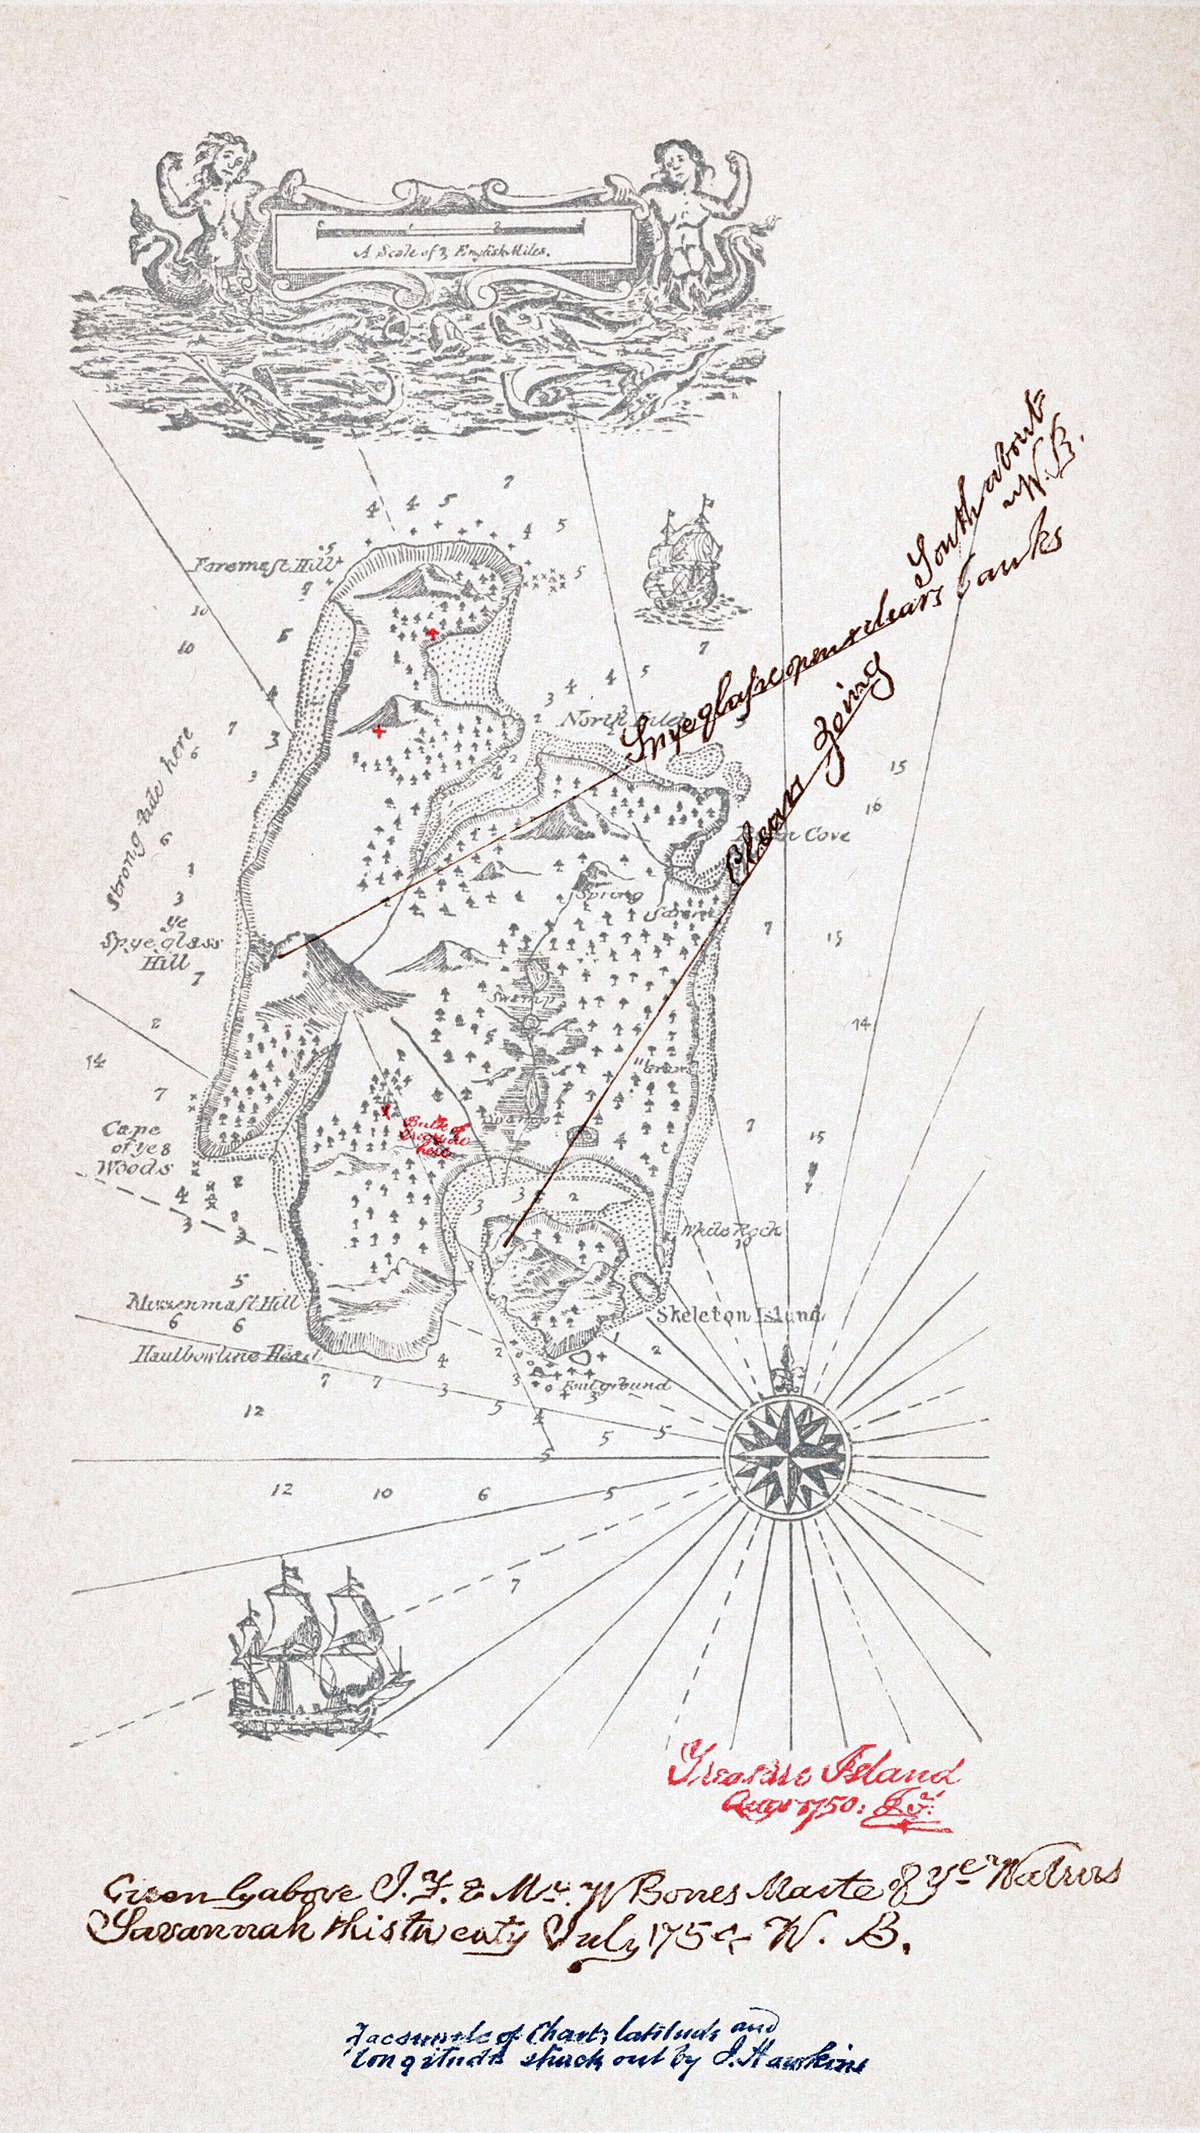 Treasure Island Map Stevenson File:Treasure island map.   Wikimedia Commons